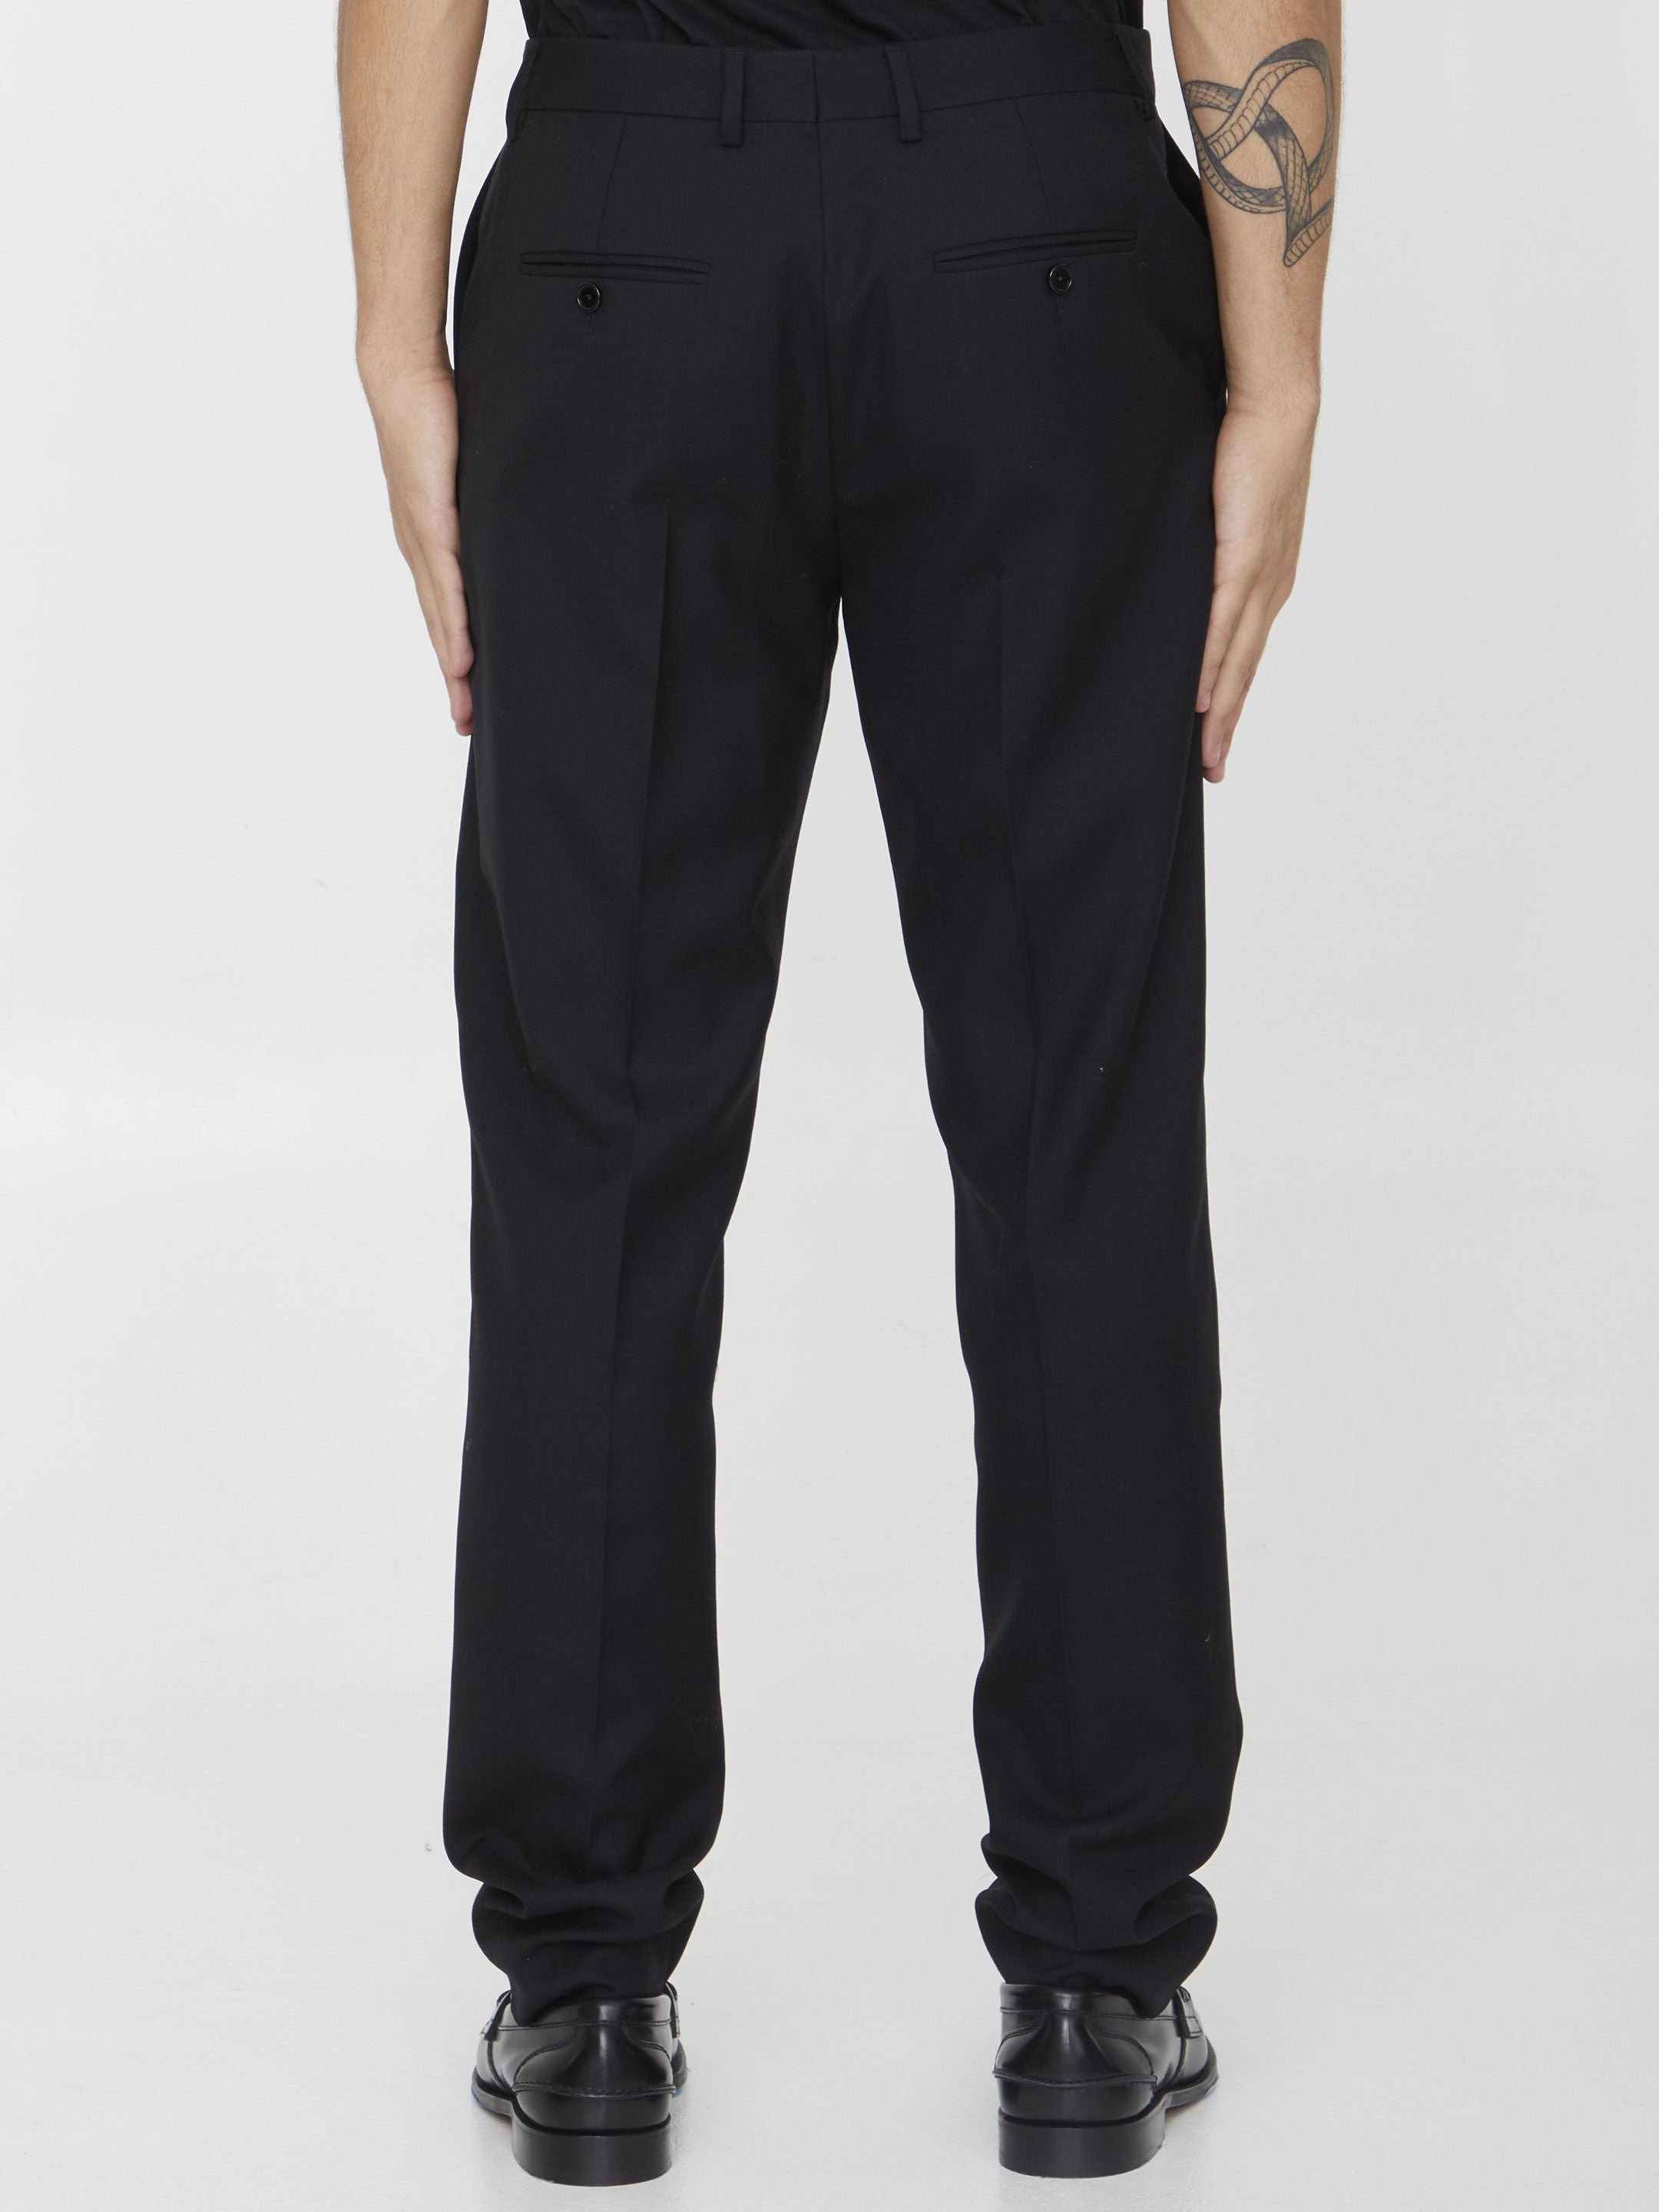 CELINE-OUTLET-SALE-Wool-gabardine-trousers-Hosen-50-BLACK-ARCHIVE-COLLECTION-4.jpg